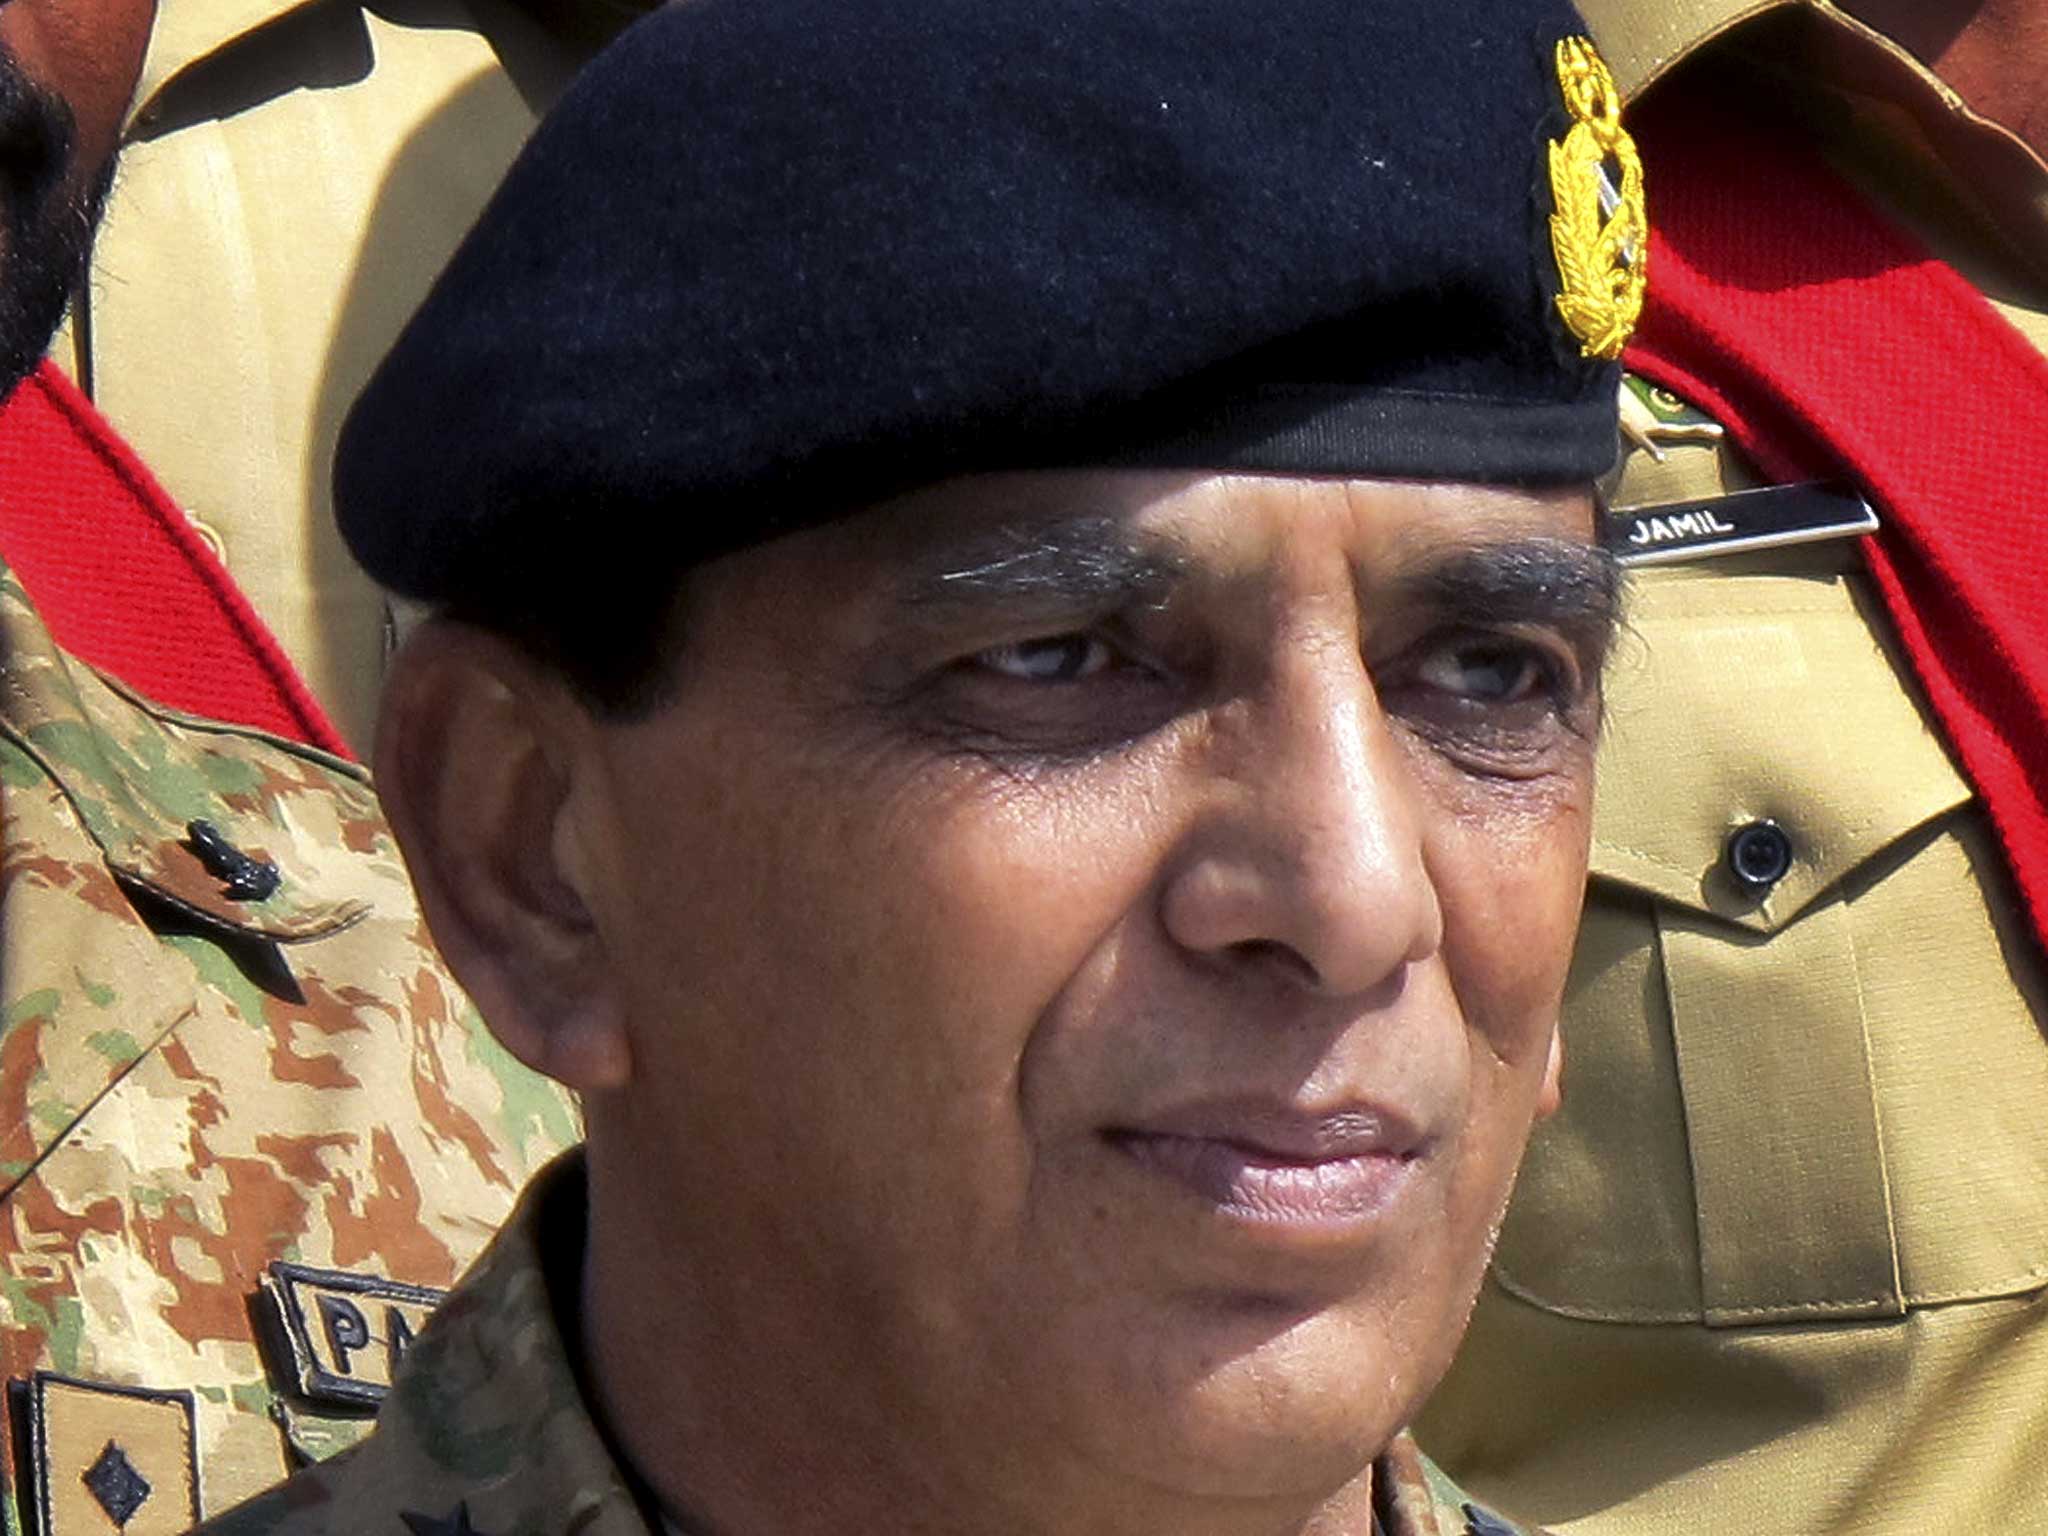 Pakistan army chief, General Ashfaq Parvez Kayani